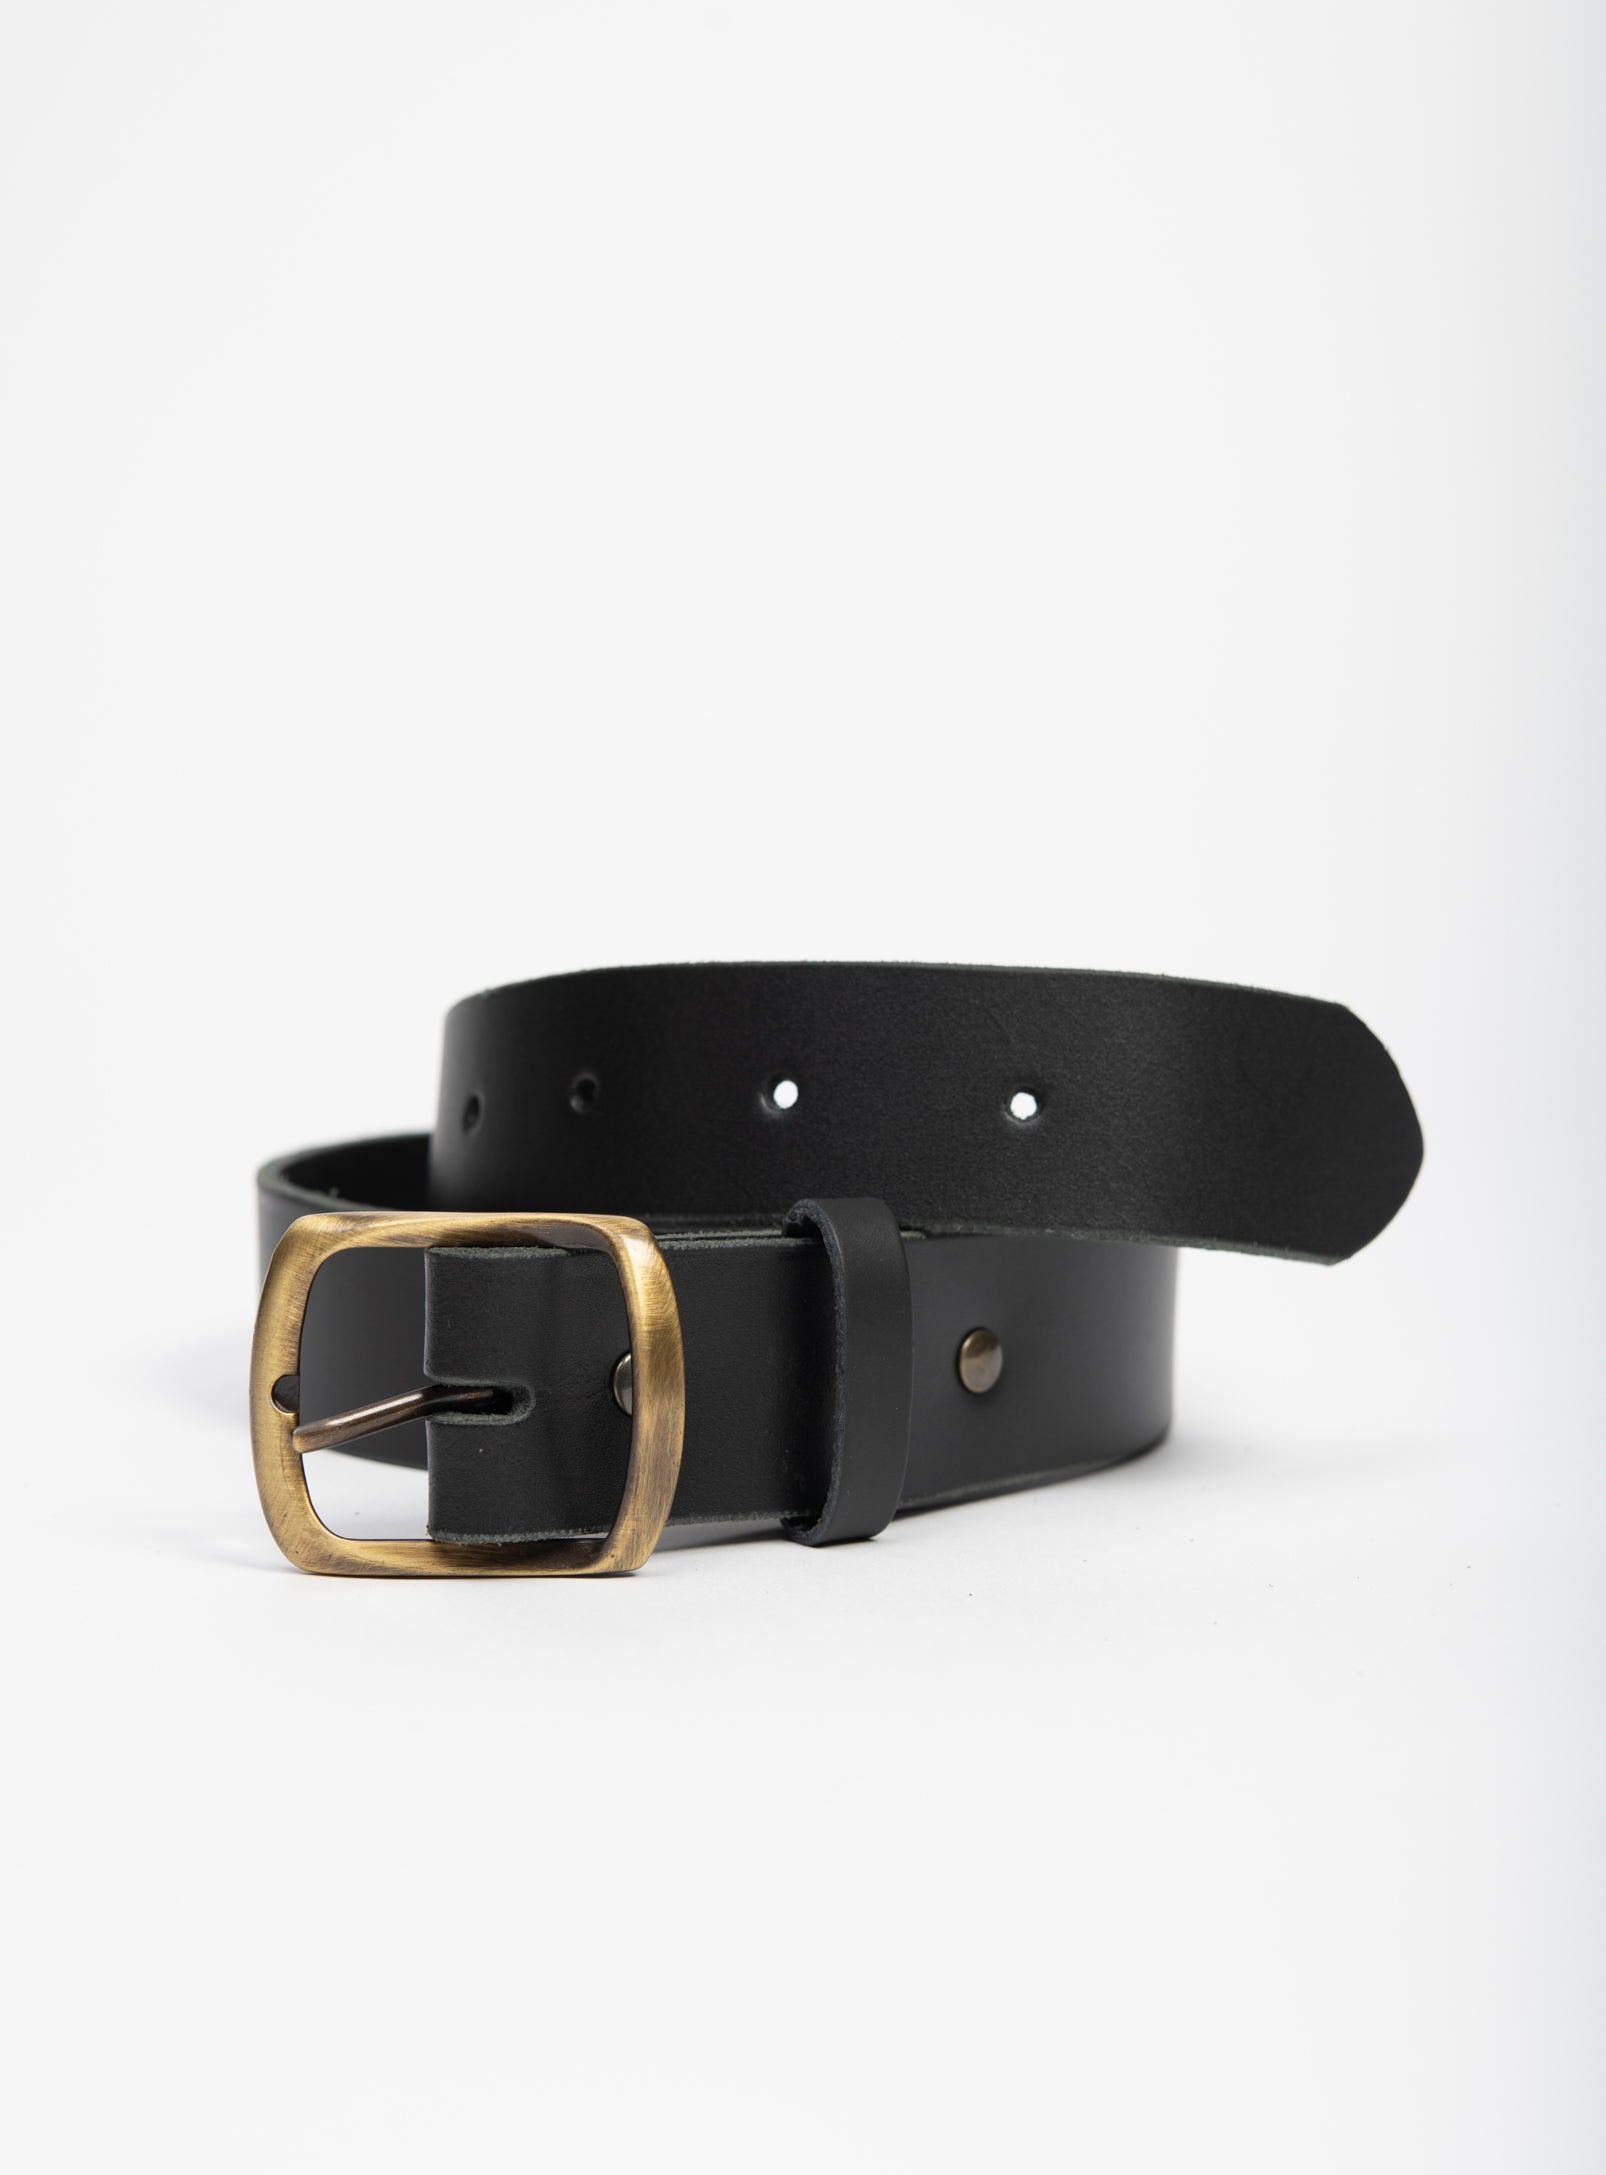 Large Brass Belt Buckle For Leather Belts,68mm Inner Diameter